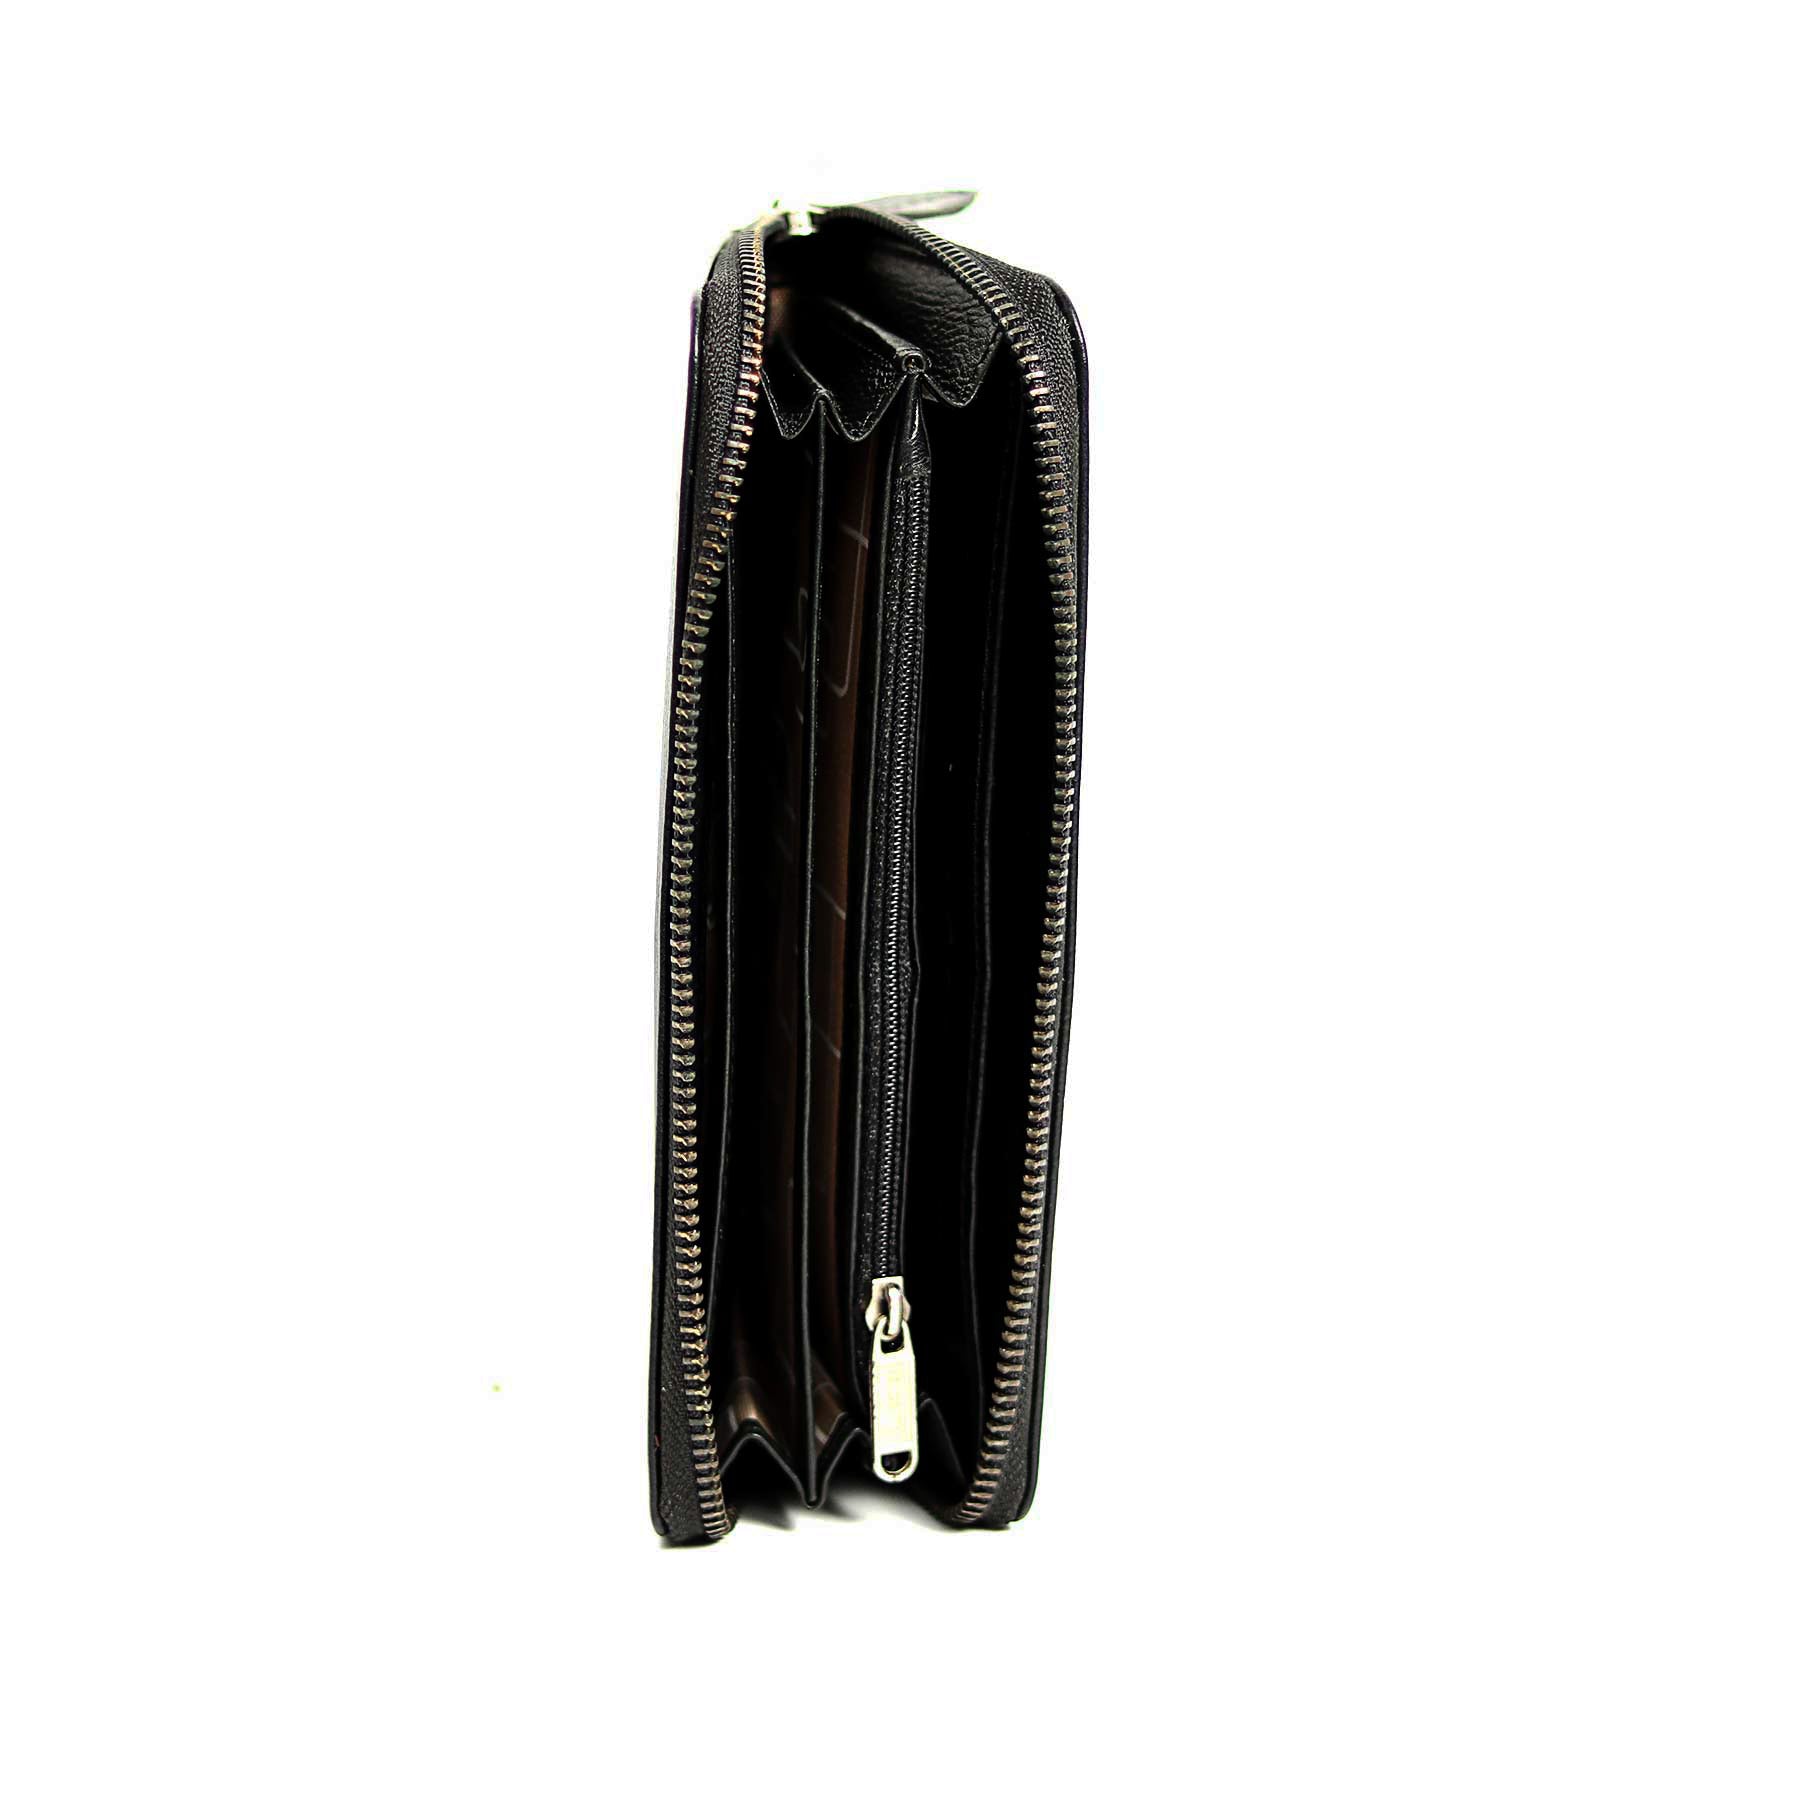 Zays Premium Leather Multifunctional Long Mobile Wallet for Unisex - Black - WL31